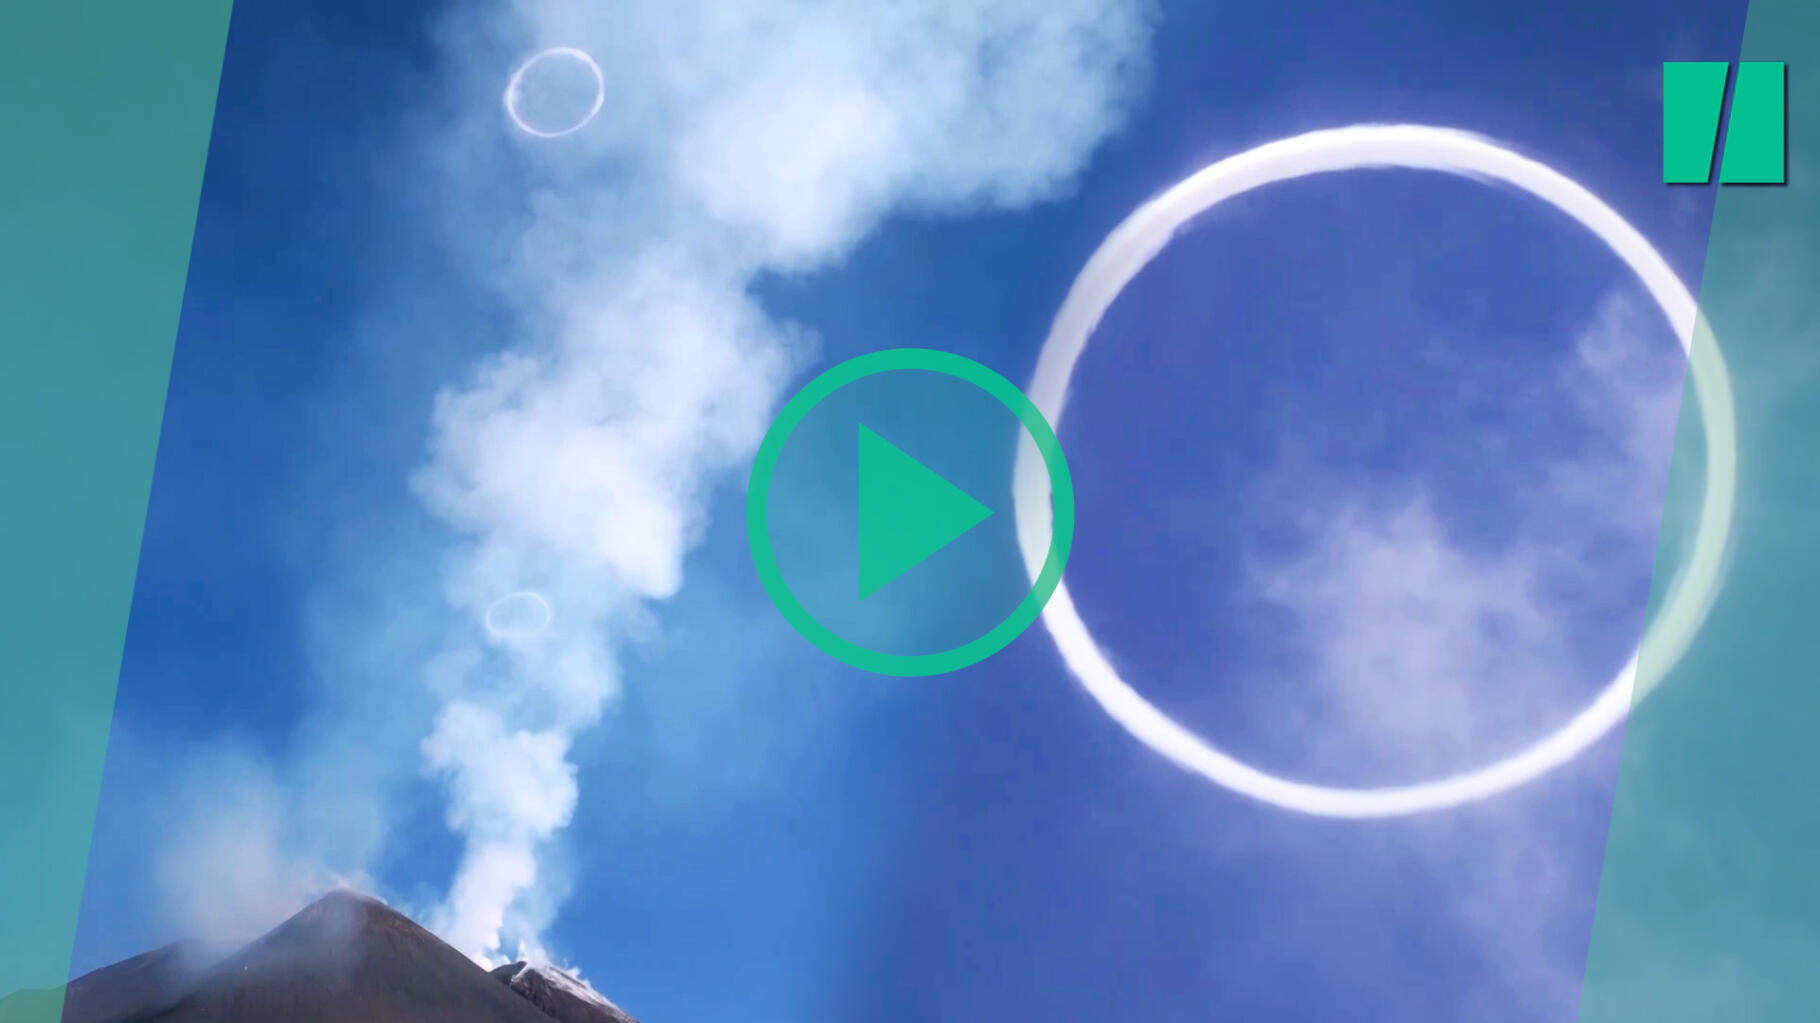 In Italy, Etna emits strange rings of smoke under the gaze of astonished tourists